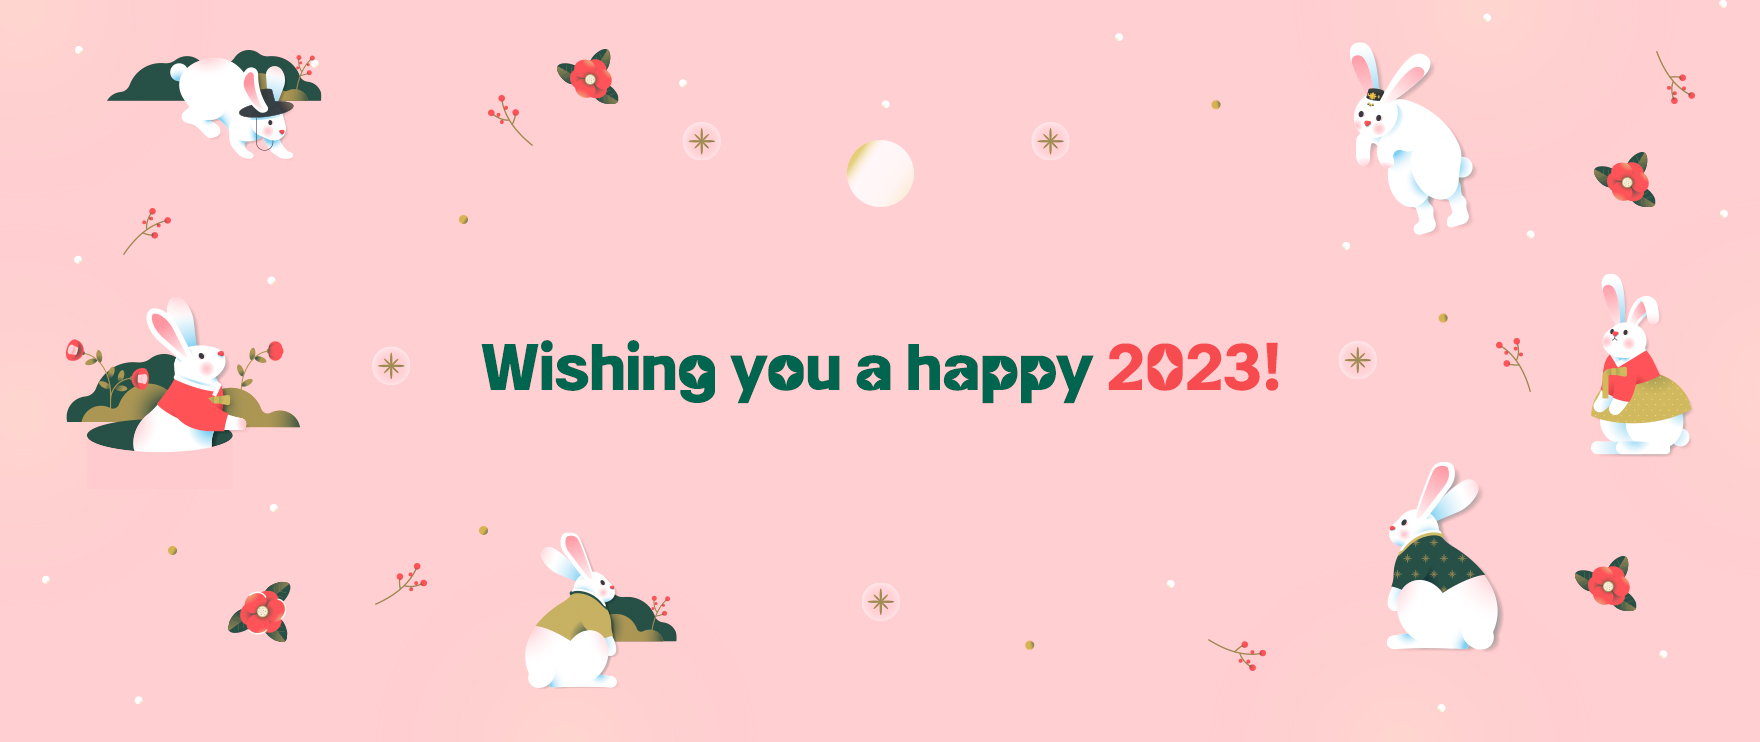 Wishing you a happy 2023!